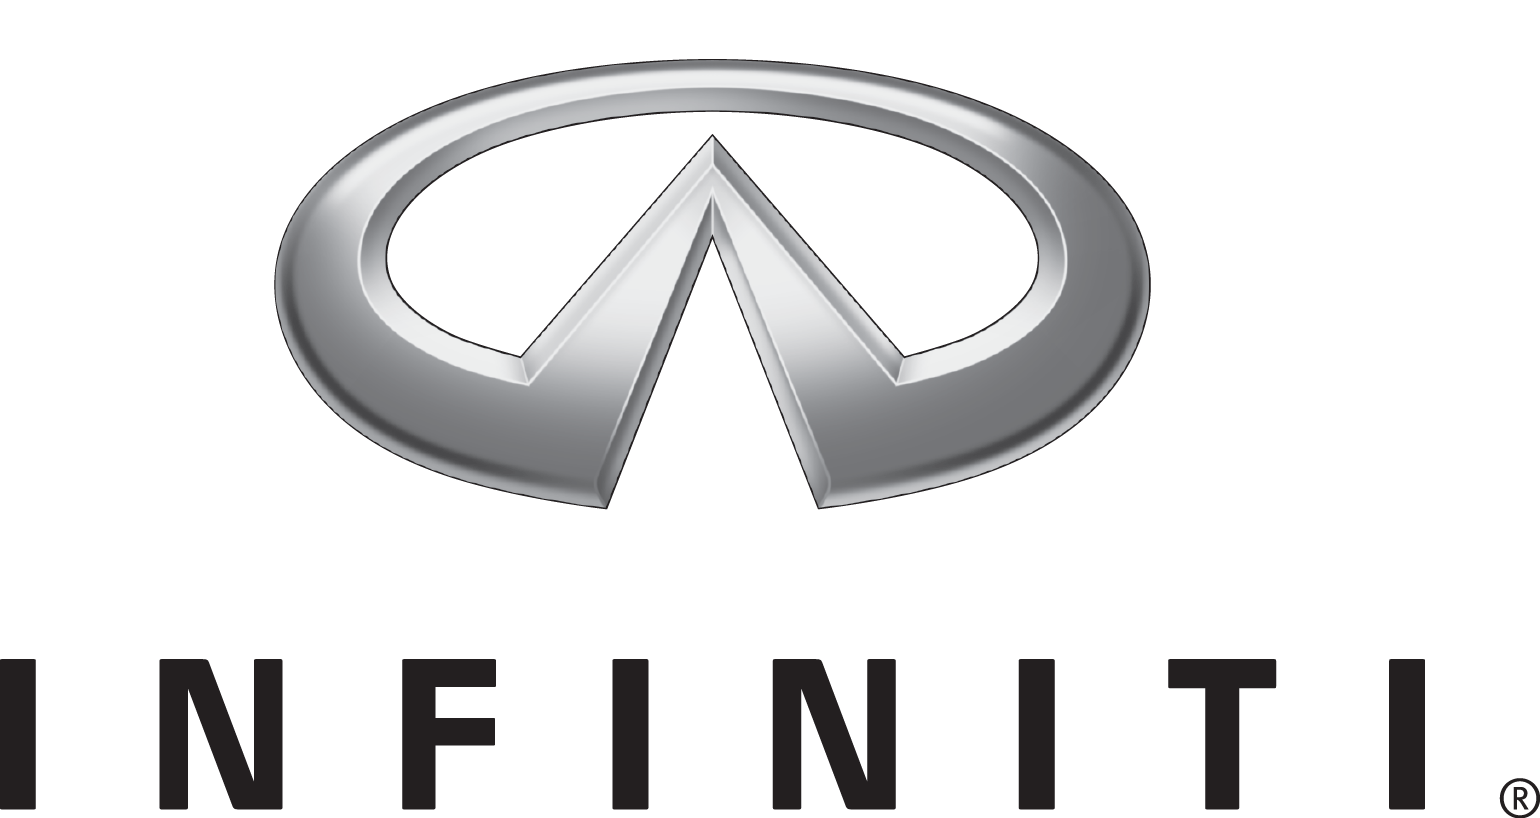 Black and White Sport Car Logo - Infiniti Logo, Infiniti Car Symbol Meaning and History | Car Brand ...